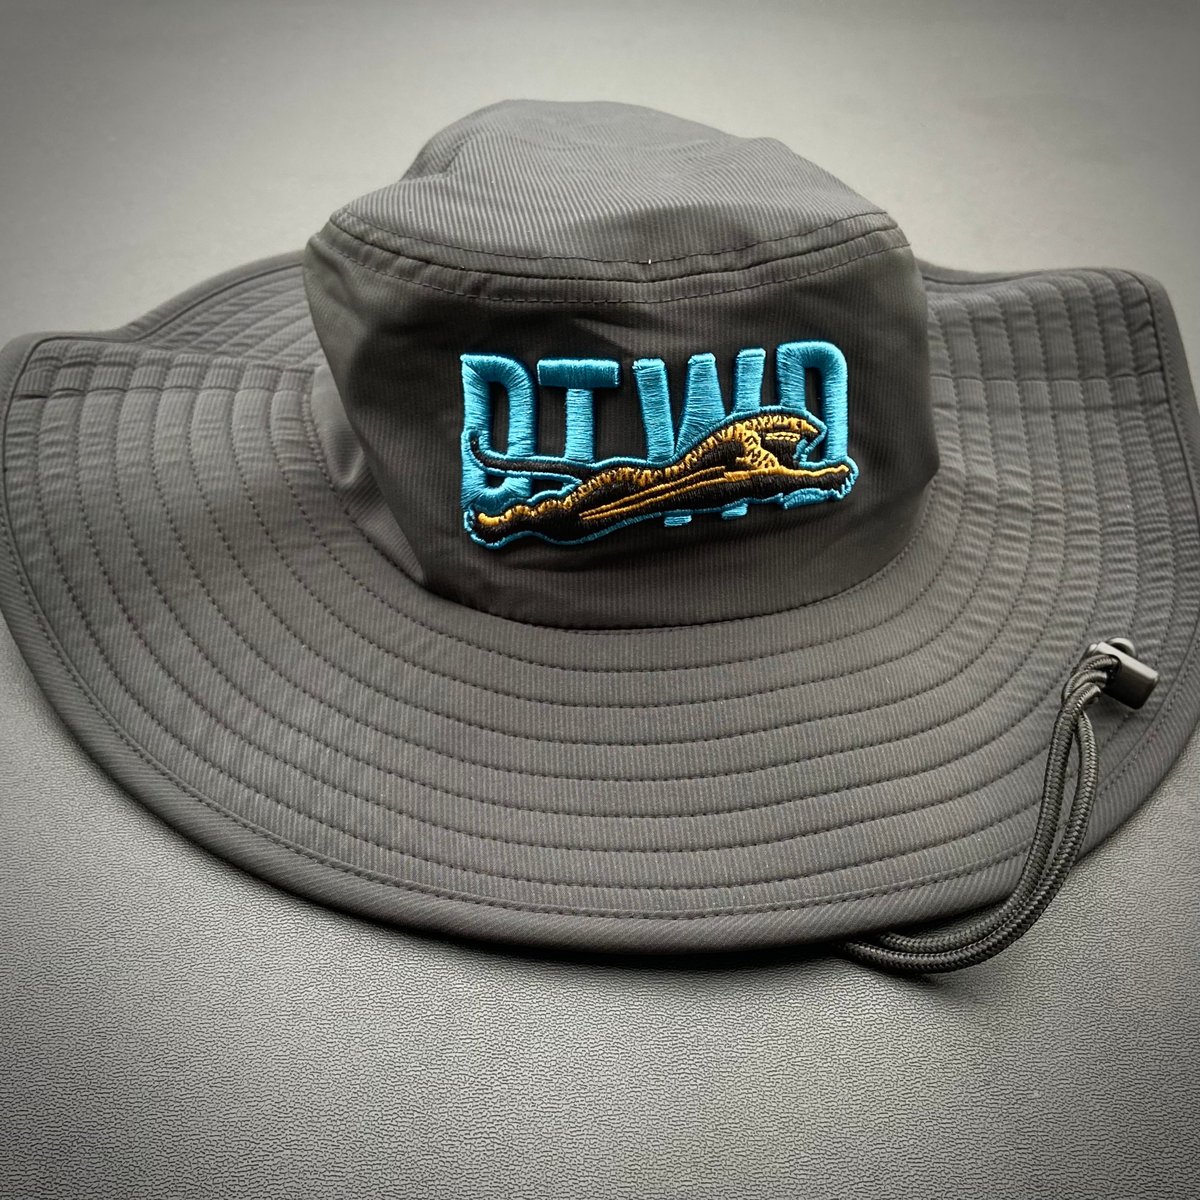 Image of DTWD - Black - Wide brim bucket hat